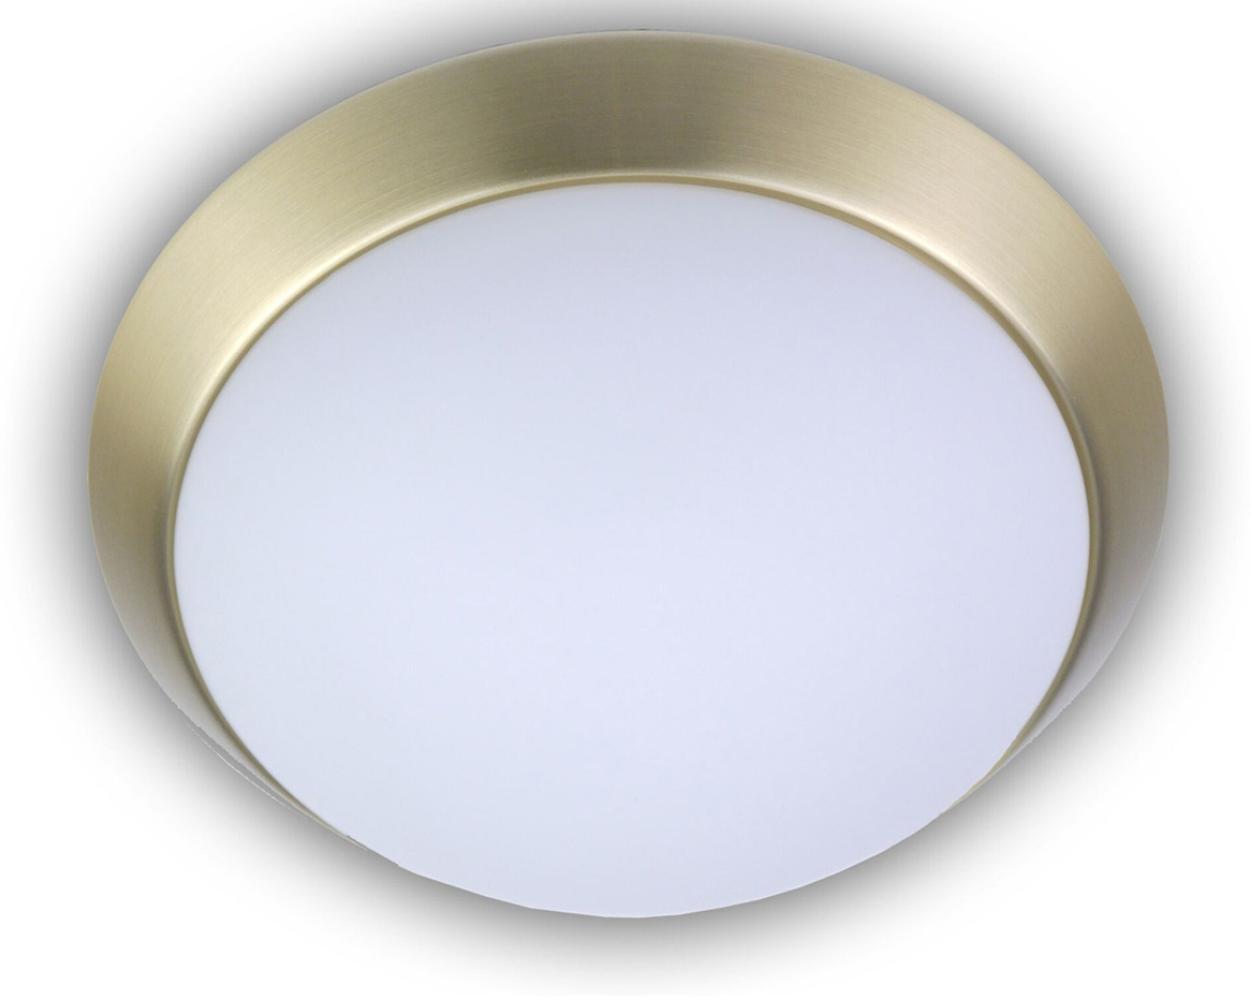 LED Deckenleuchte Deckenschale rund Opalglas matt Dekorring Messing matt Ø 25cm Bild 1